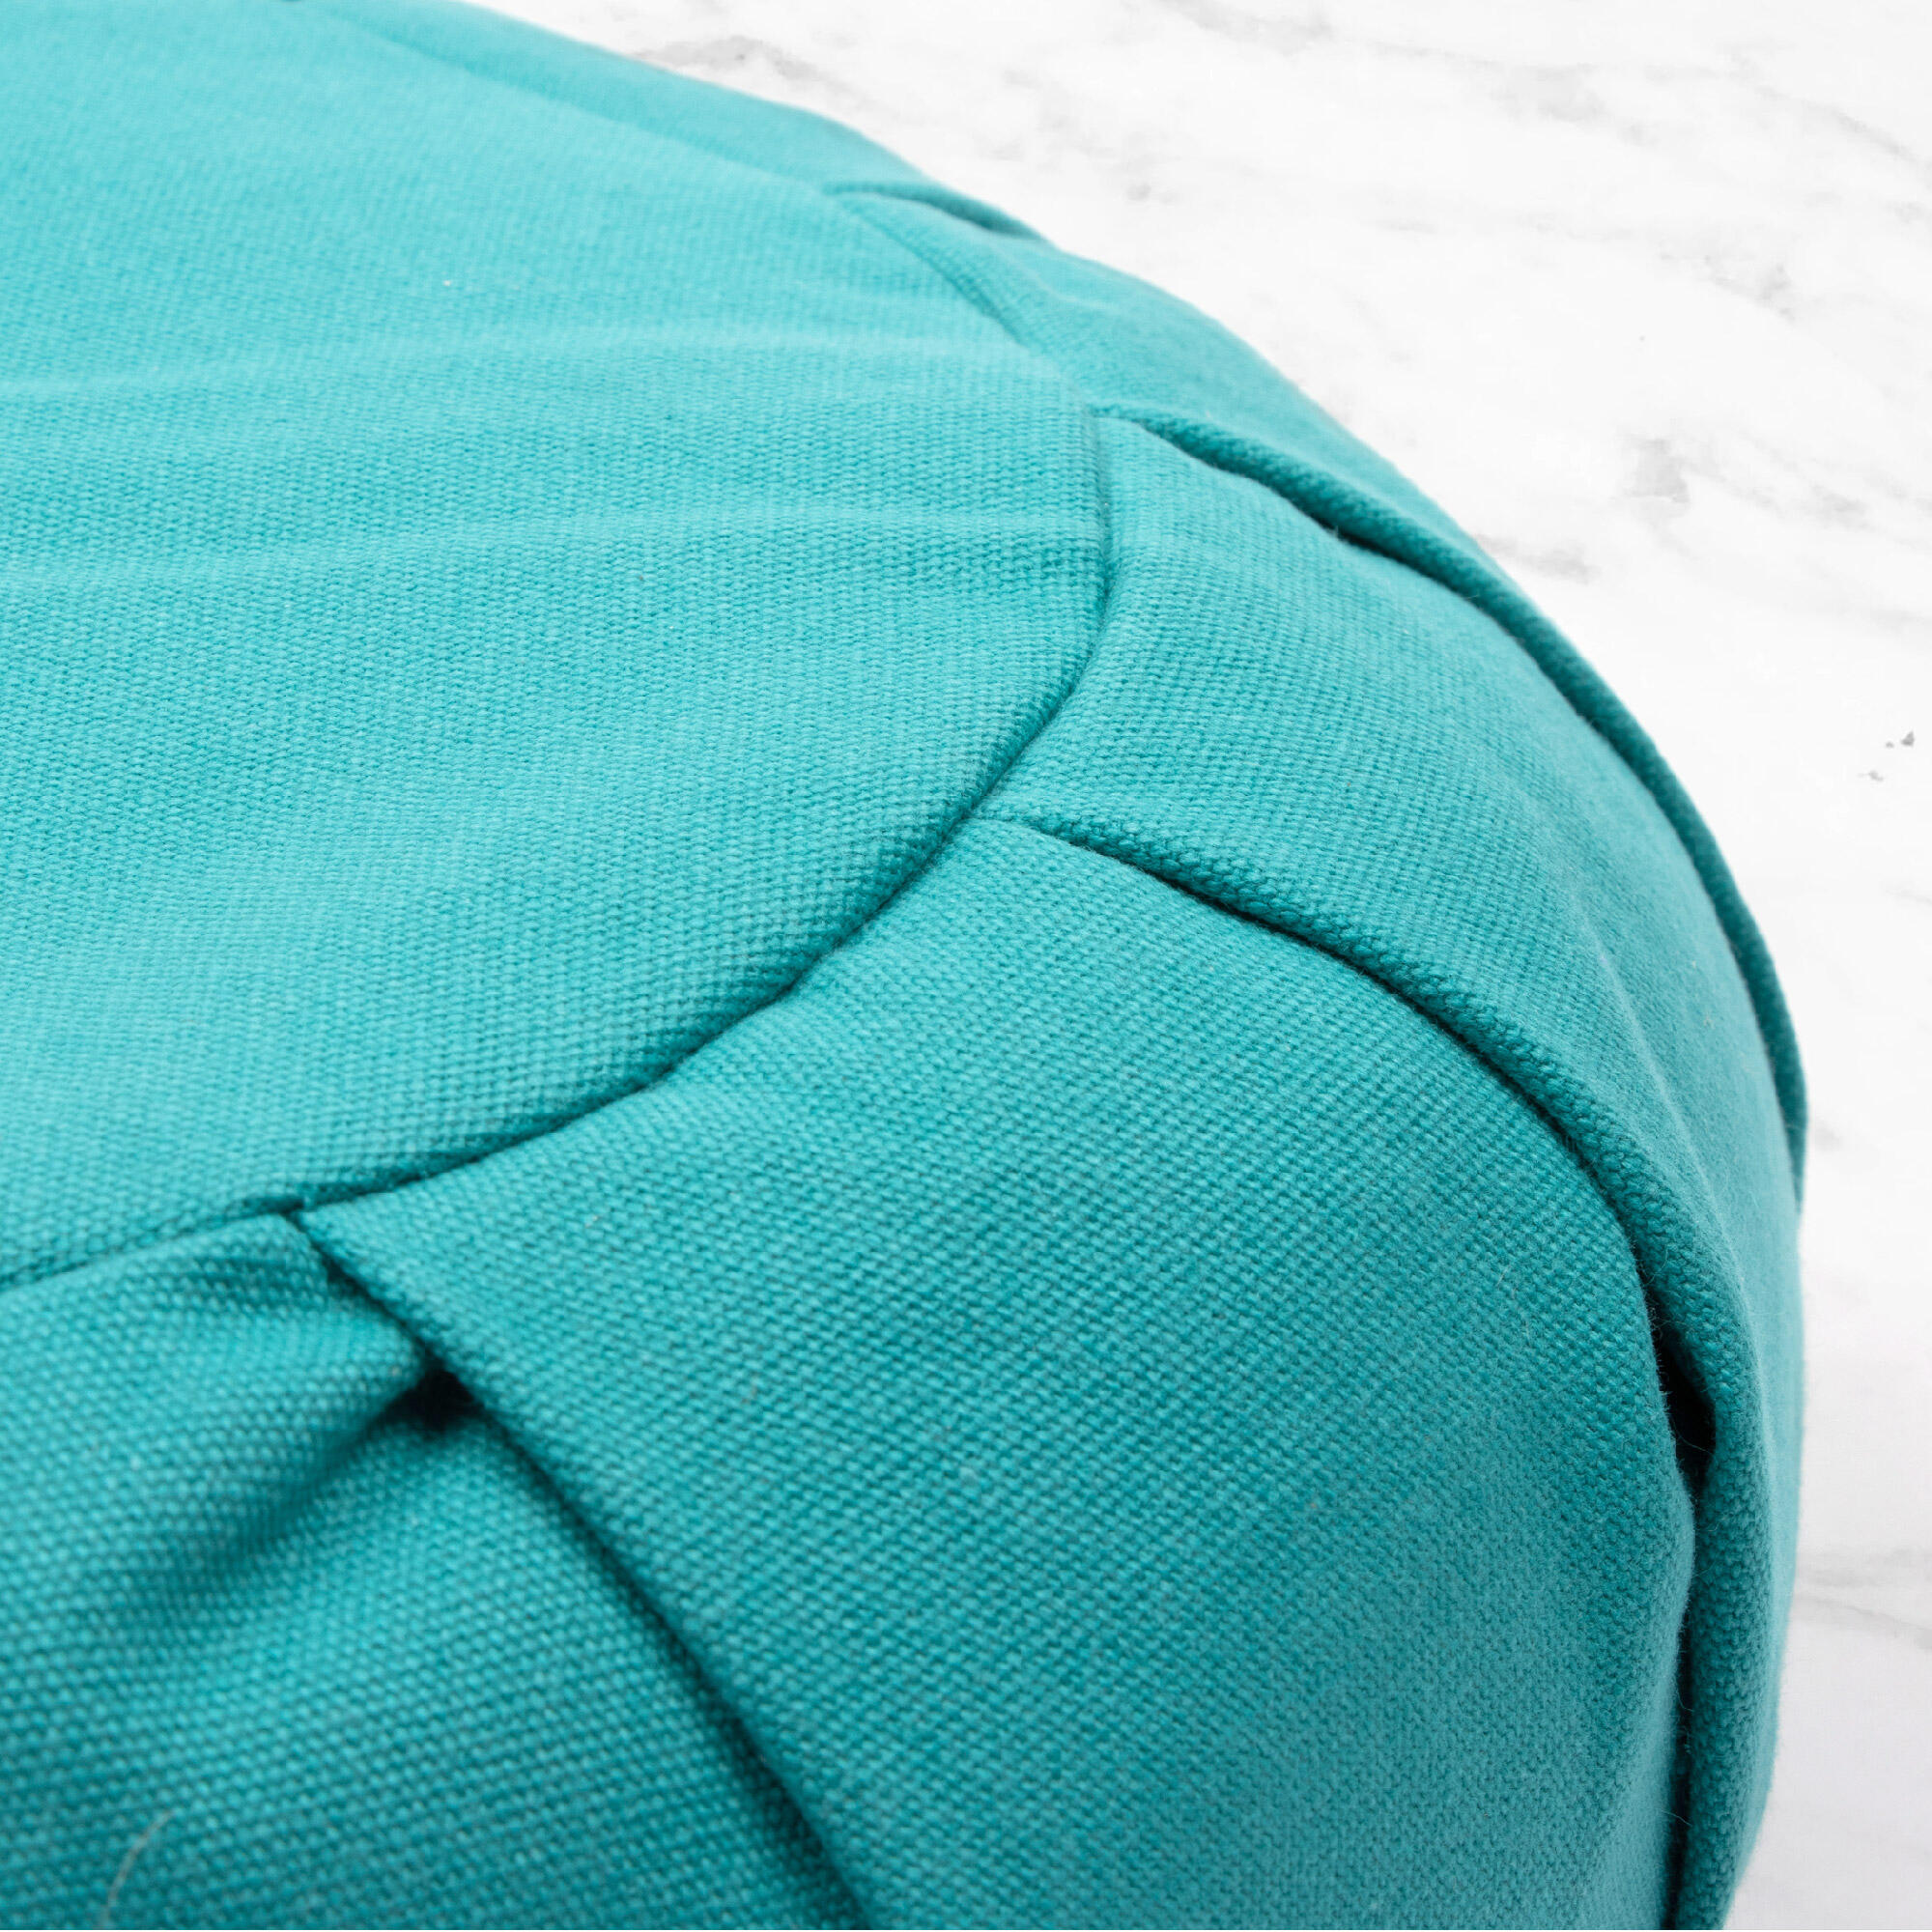 Myga Zafu Meditation Cushion - Turquoise 2/7